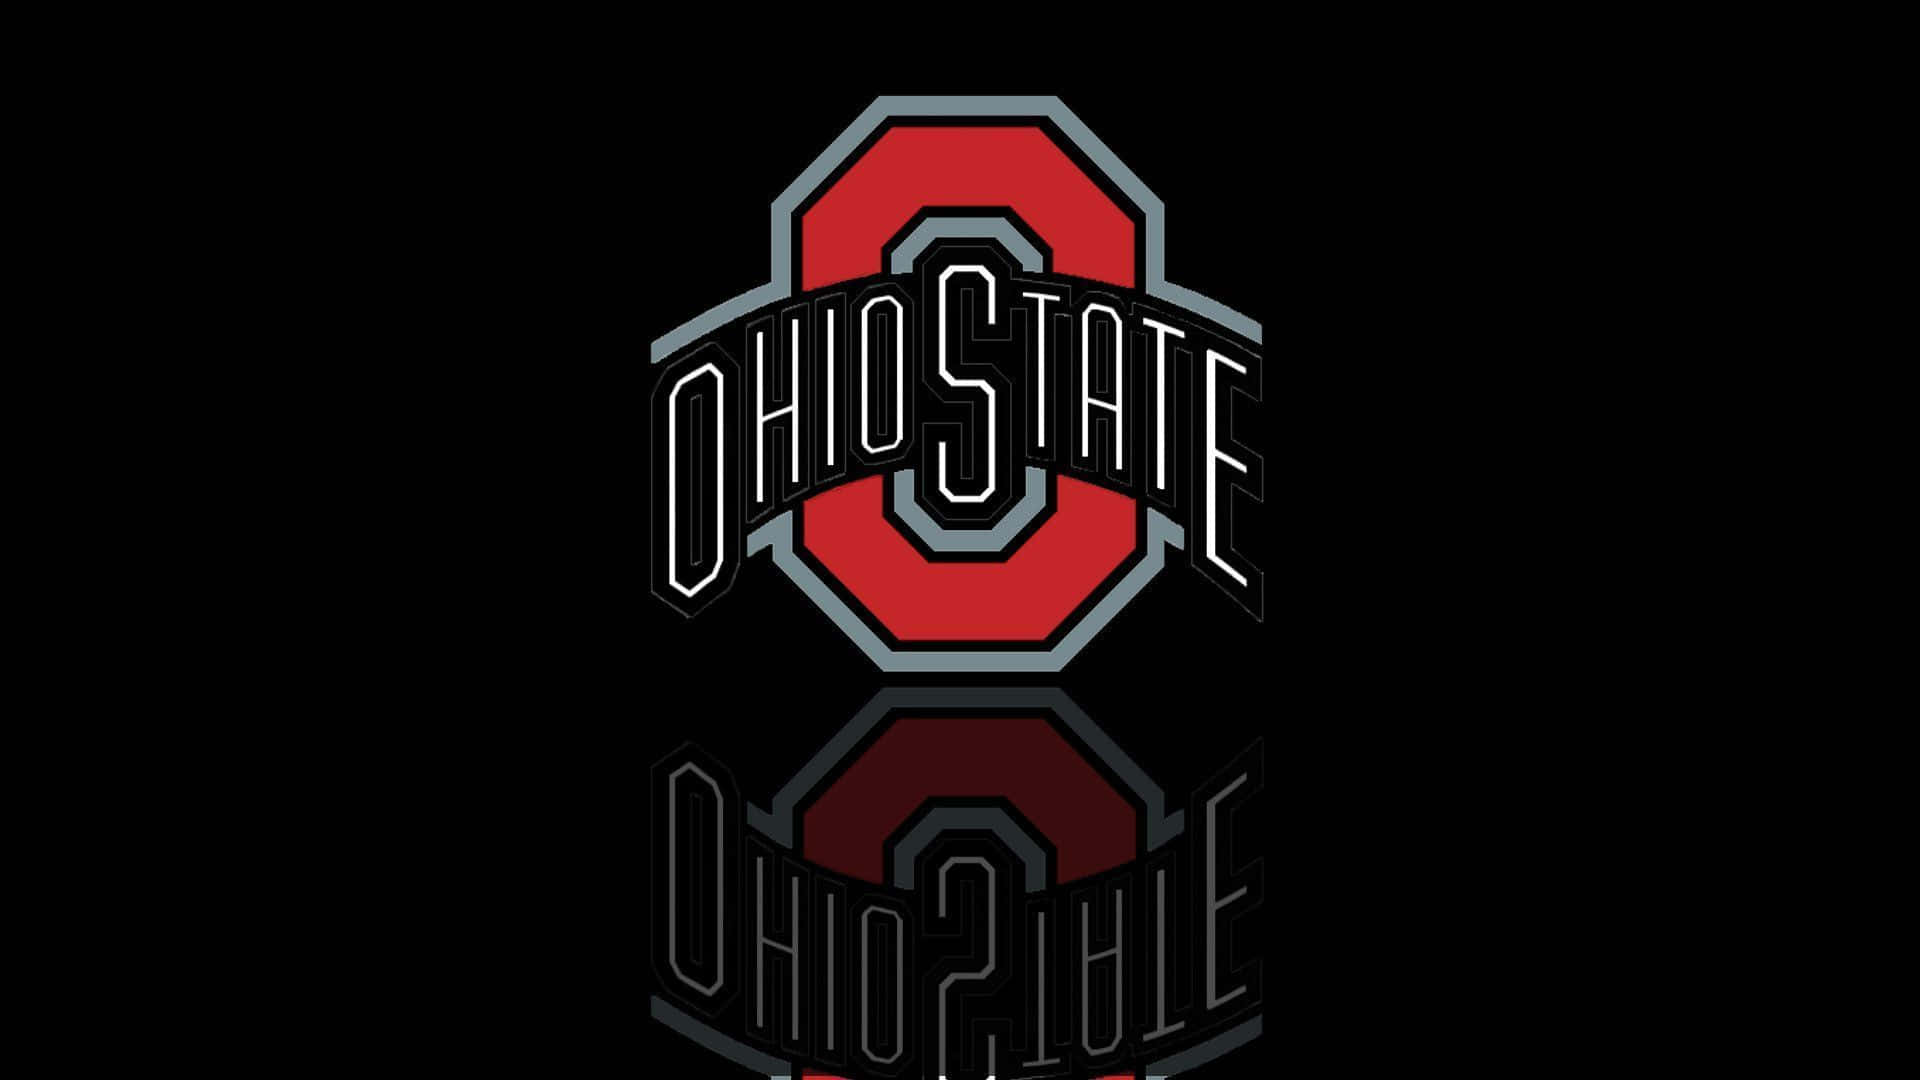 Ohiostate Logotypen På En Blank Svart Yta. Wallpaper